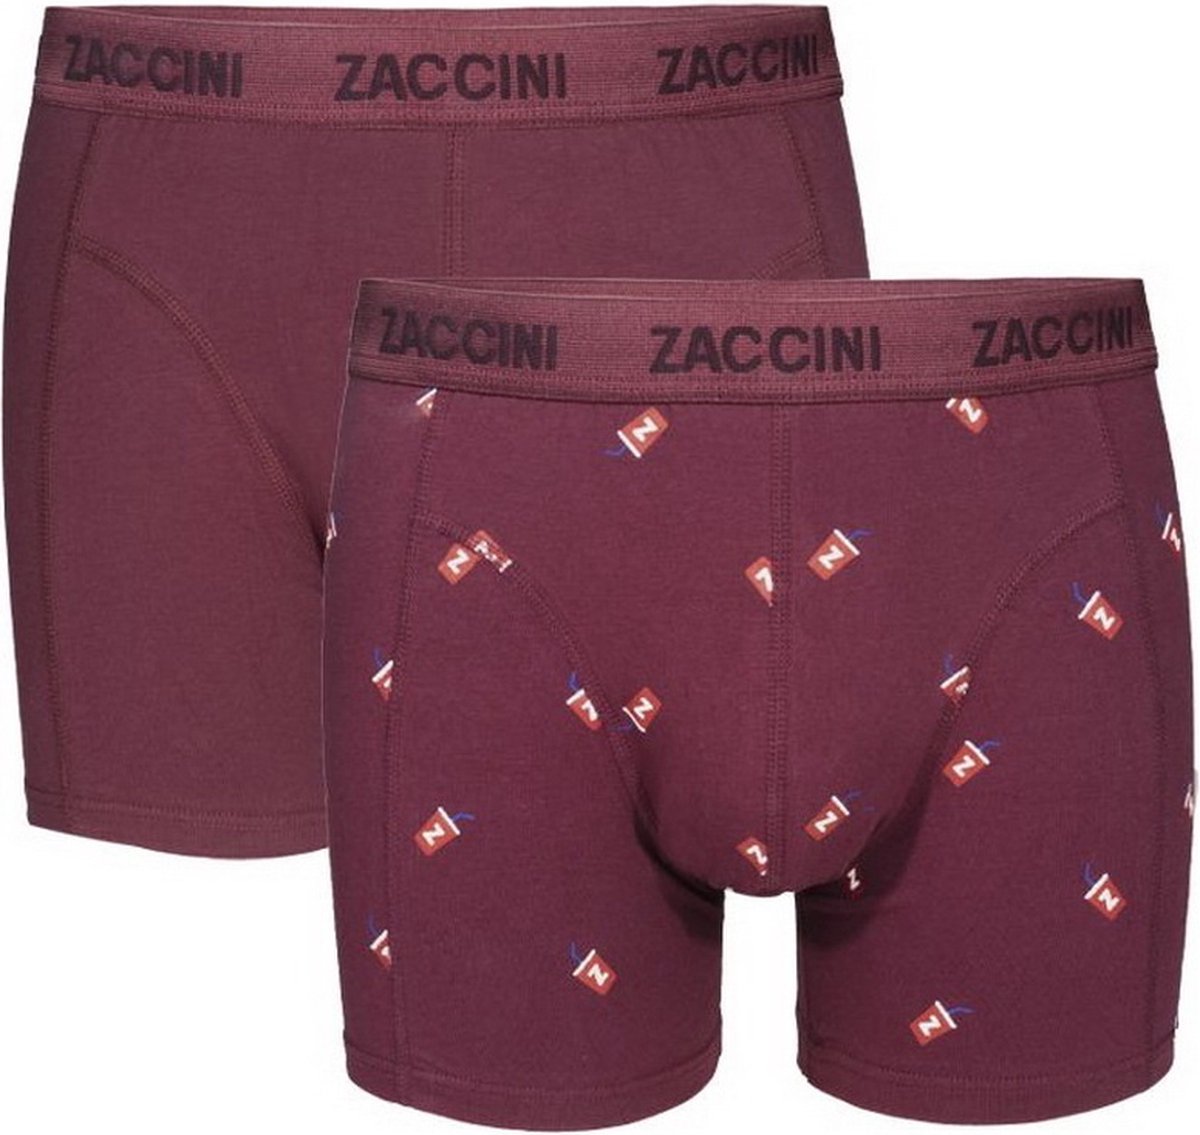 Zaccini - Heren Boxershorts - 2 pack - Milkshake - Bordeaux Rood